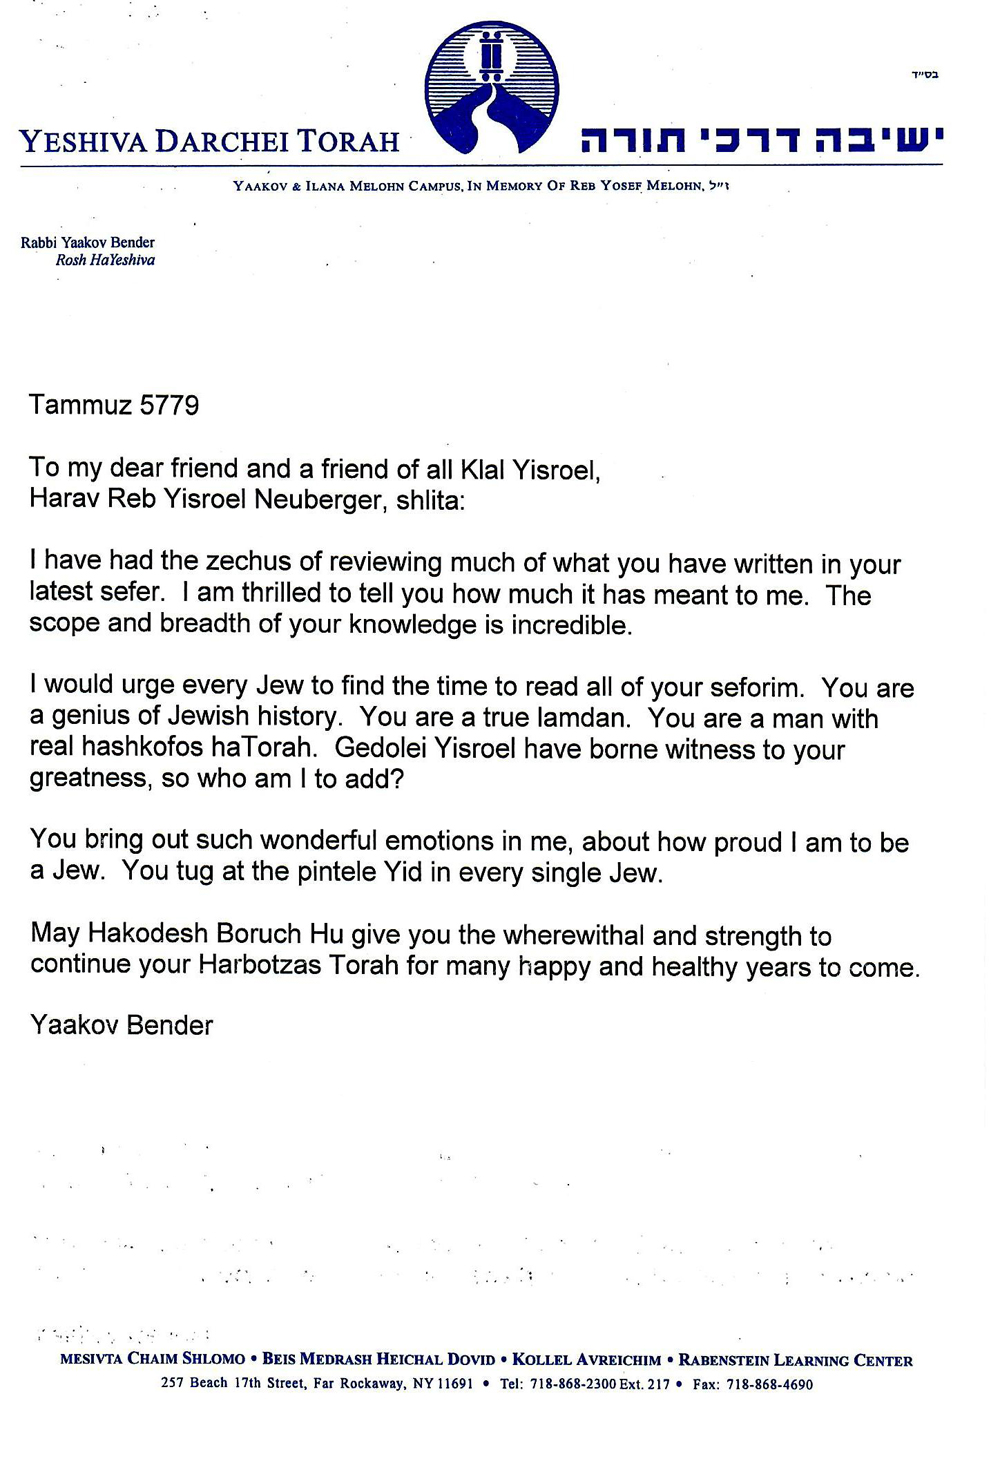 Rabbi Yaakov Bender endorsement